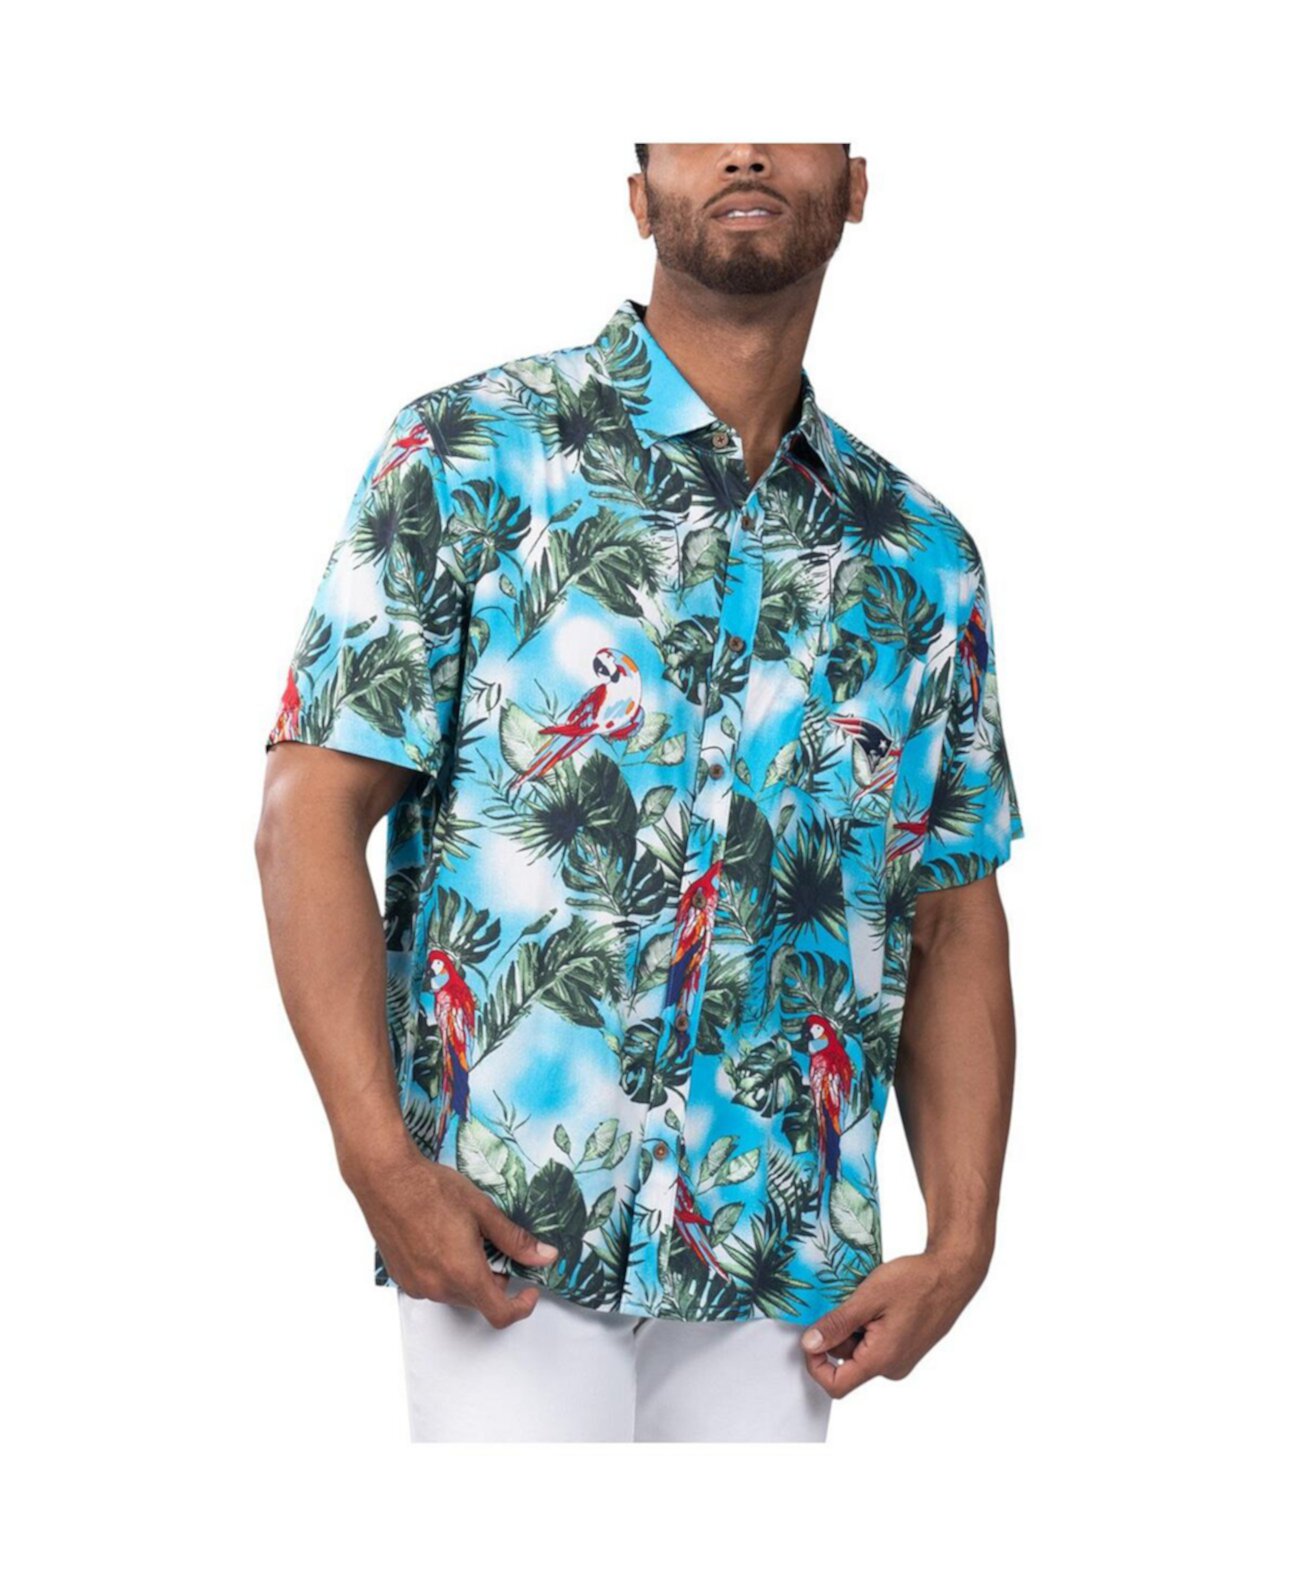 Men's Light Blue New England Patriots Jungle Parrot Party Button-Up Shirt Margaritaville